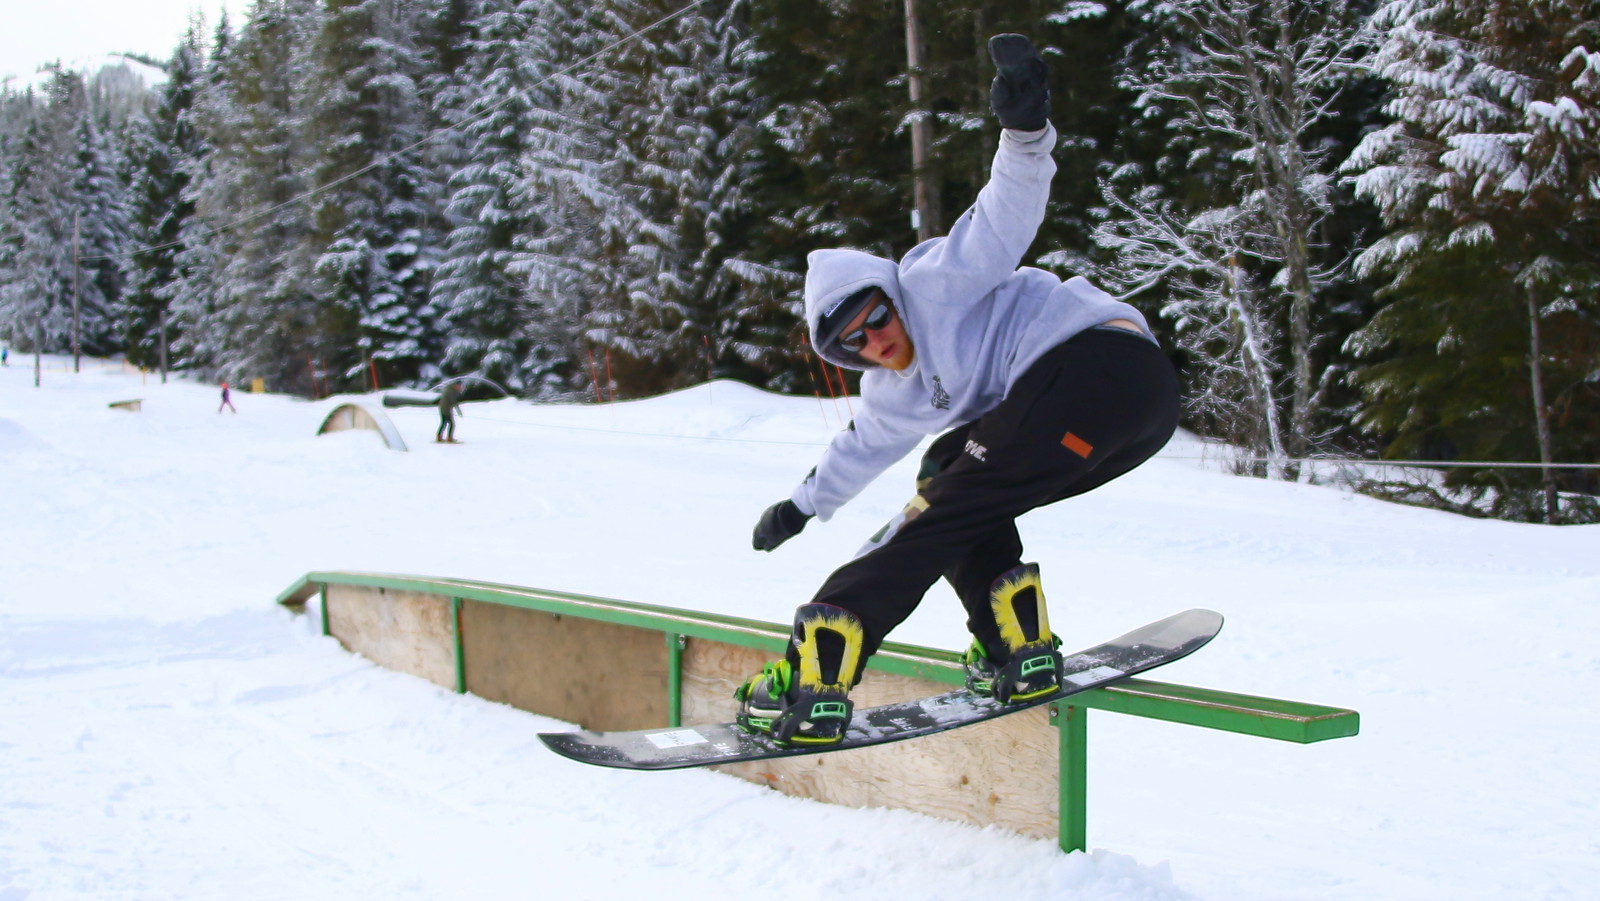 A snowboarder grinding a rail at Ski Bowl.